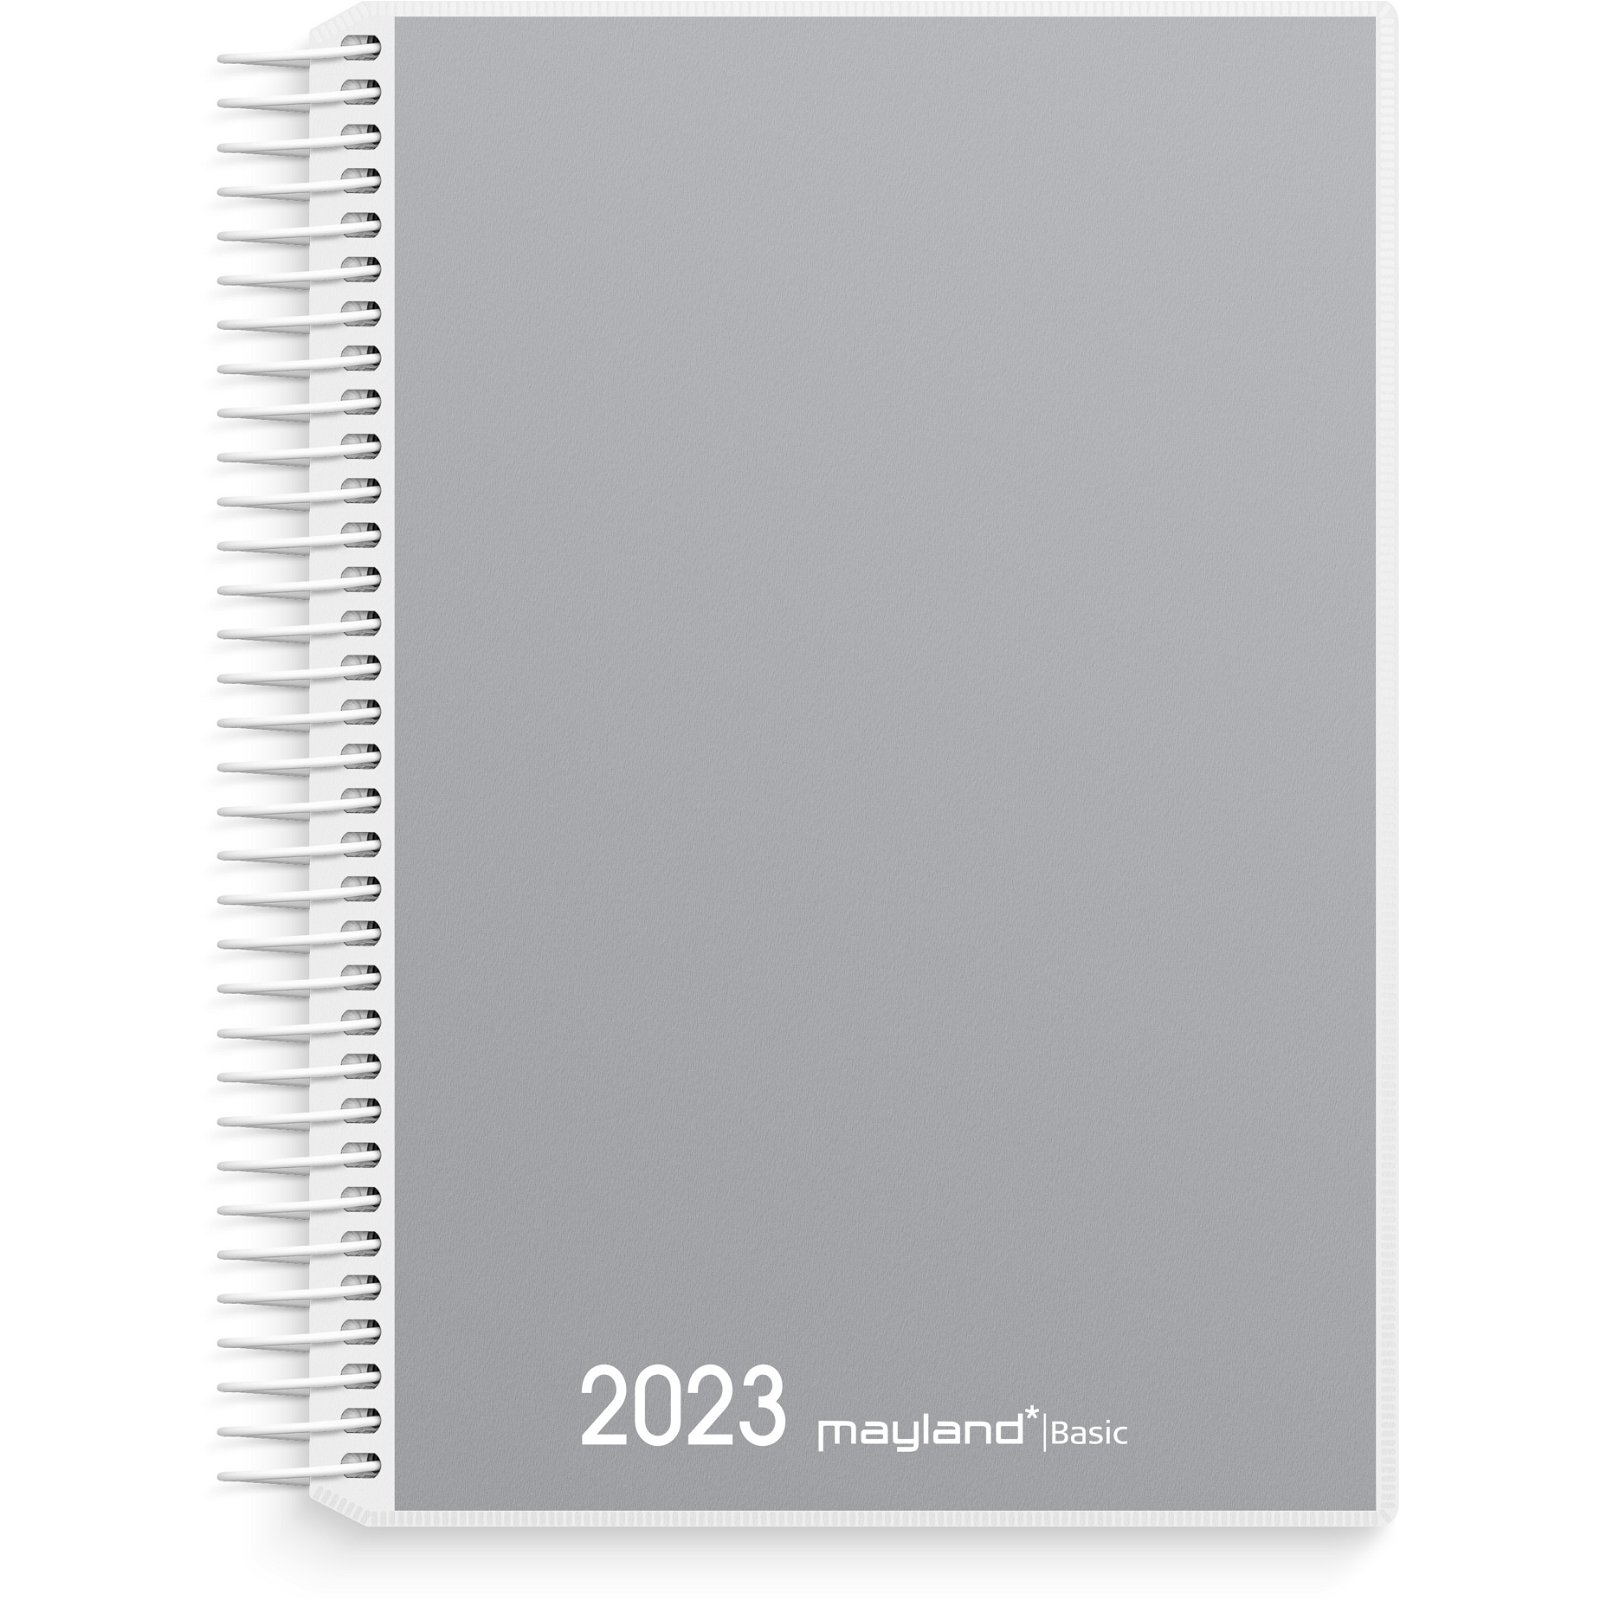 Mayland Basic dagkalender 2023 2023